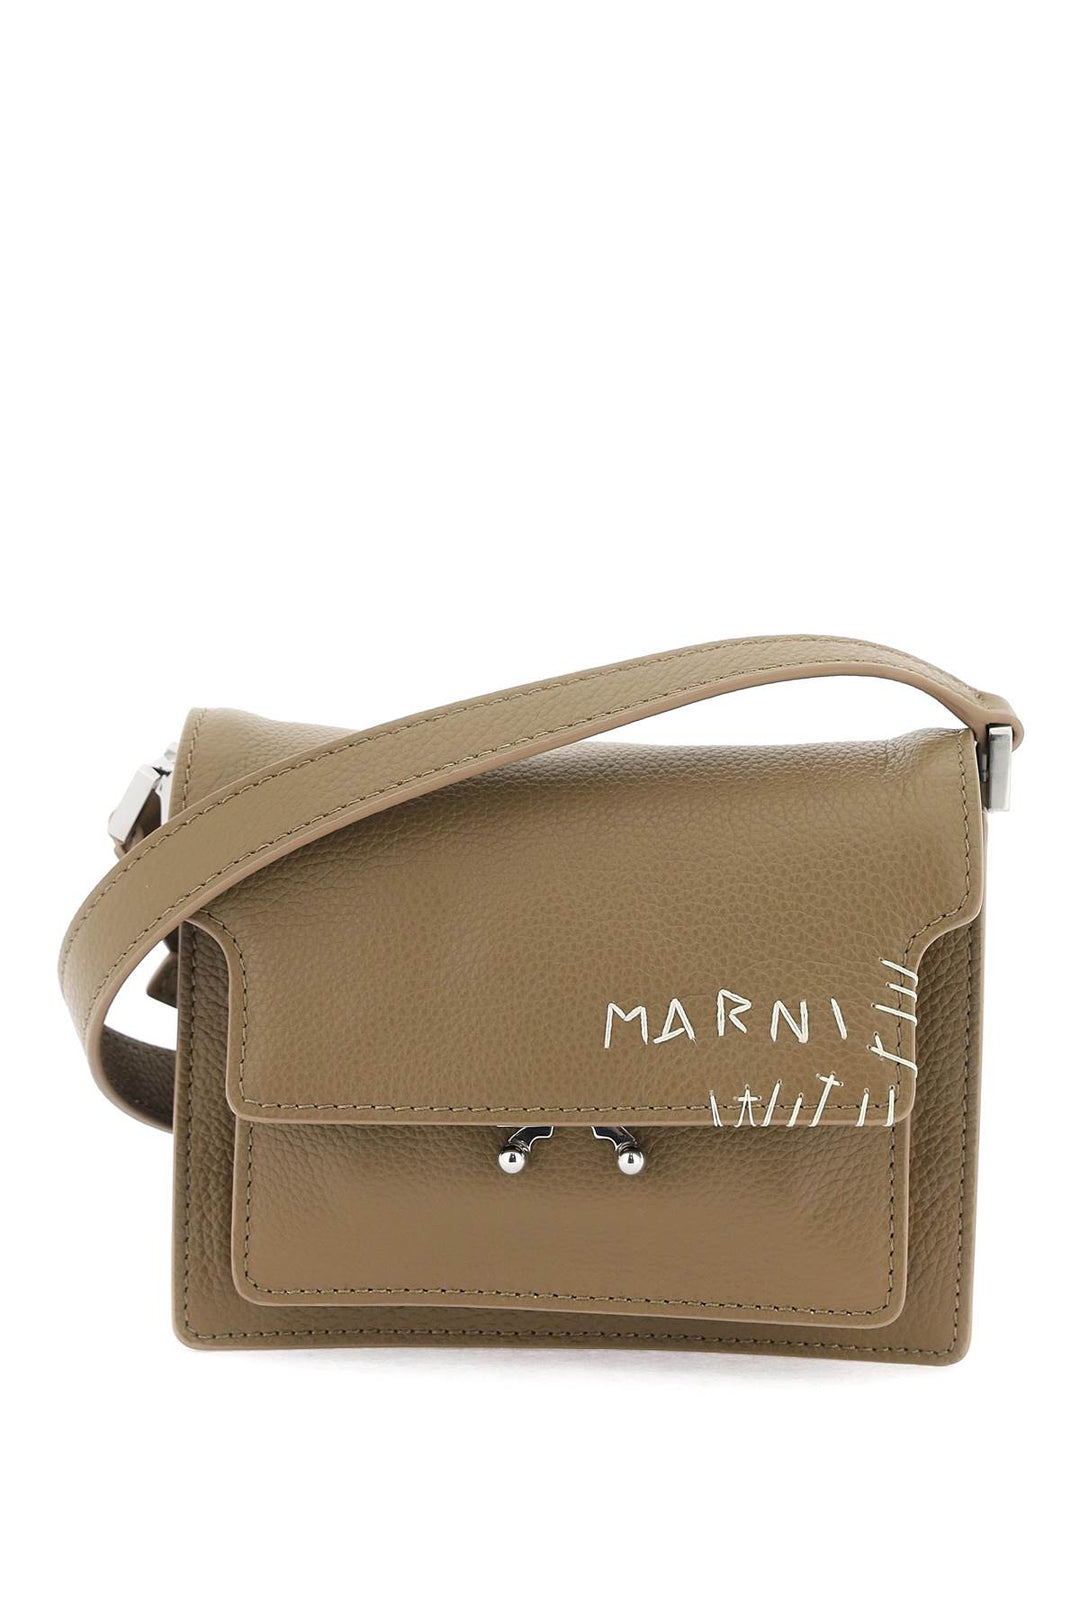 Marni Mini Soft Trunk Shoulder Bag   Beige